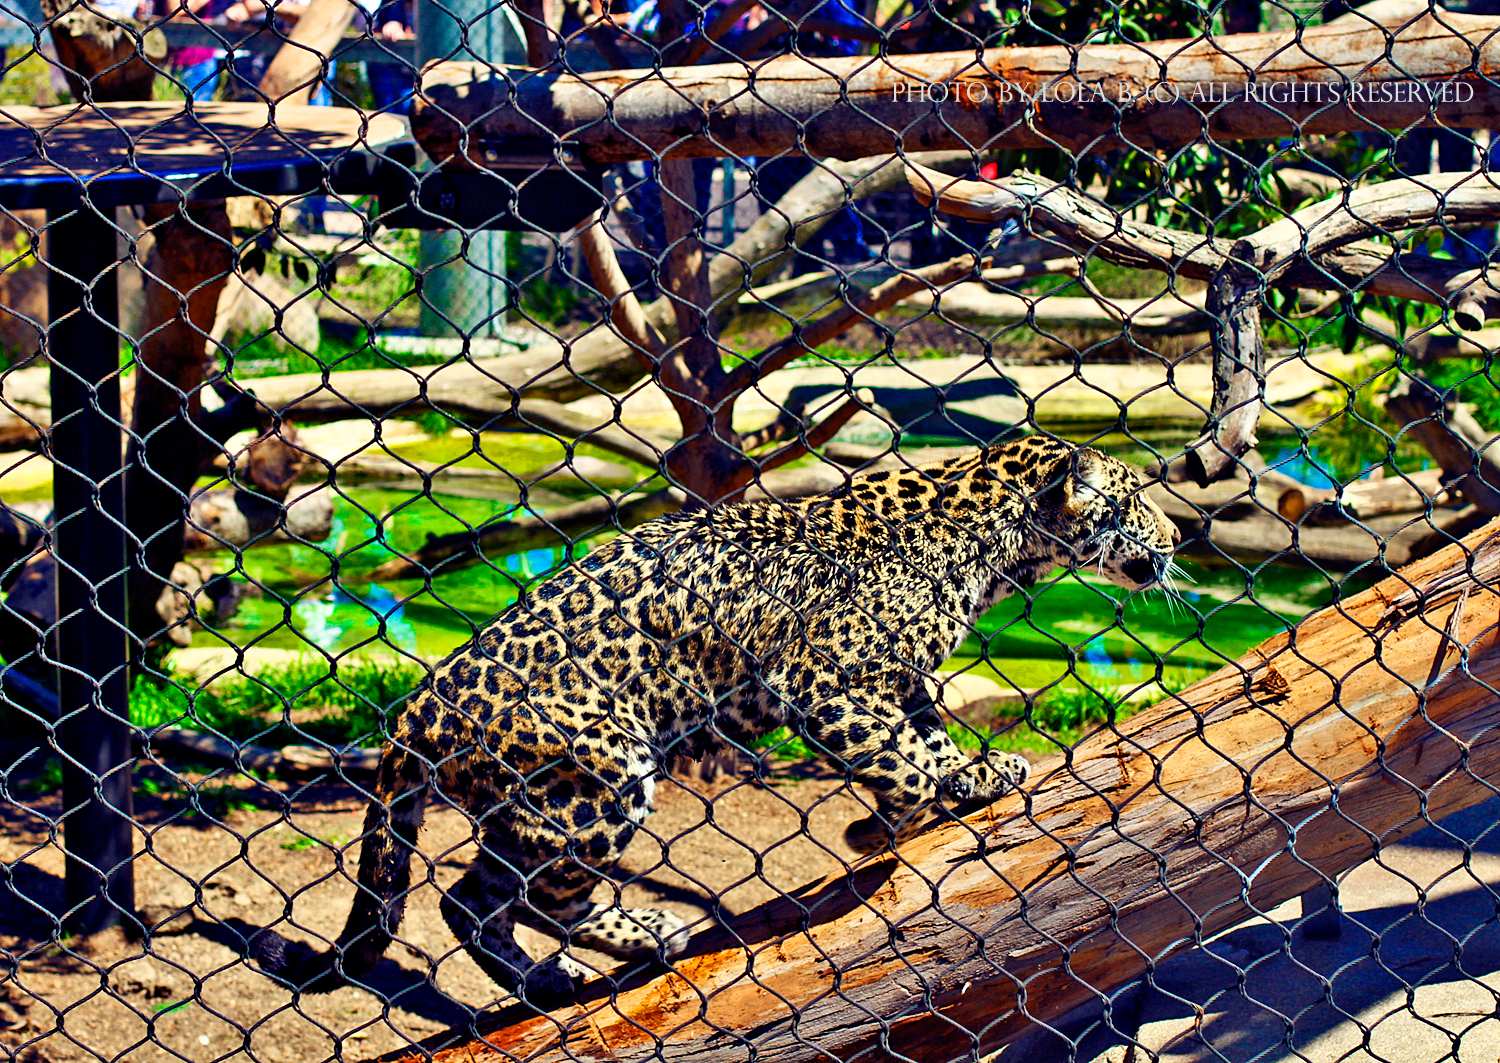 Cheetah at San Diego zoo